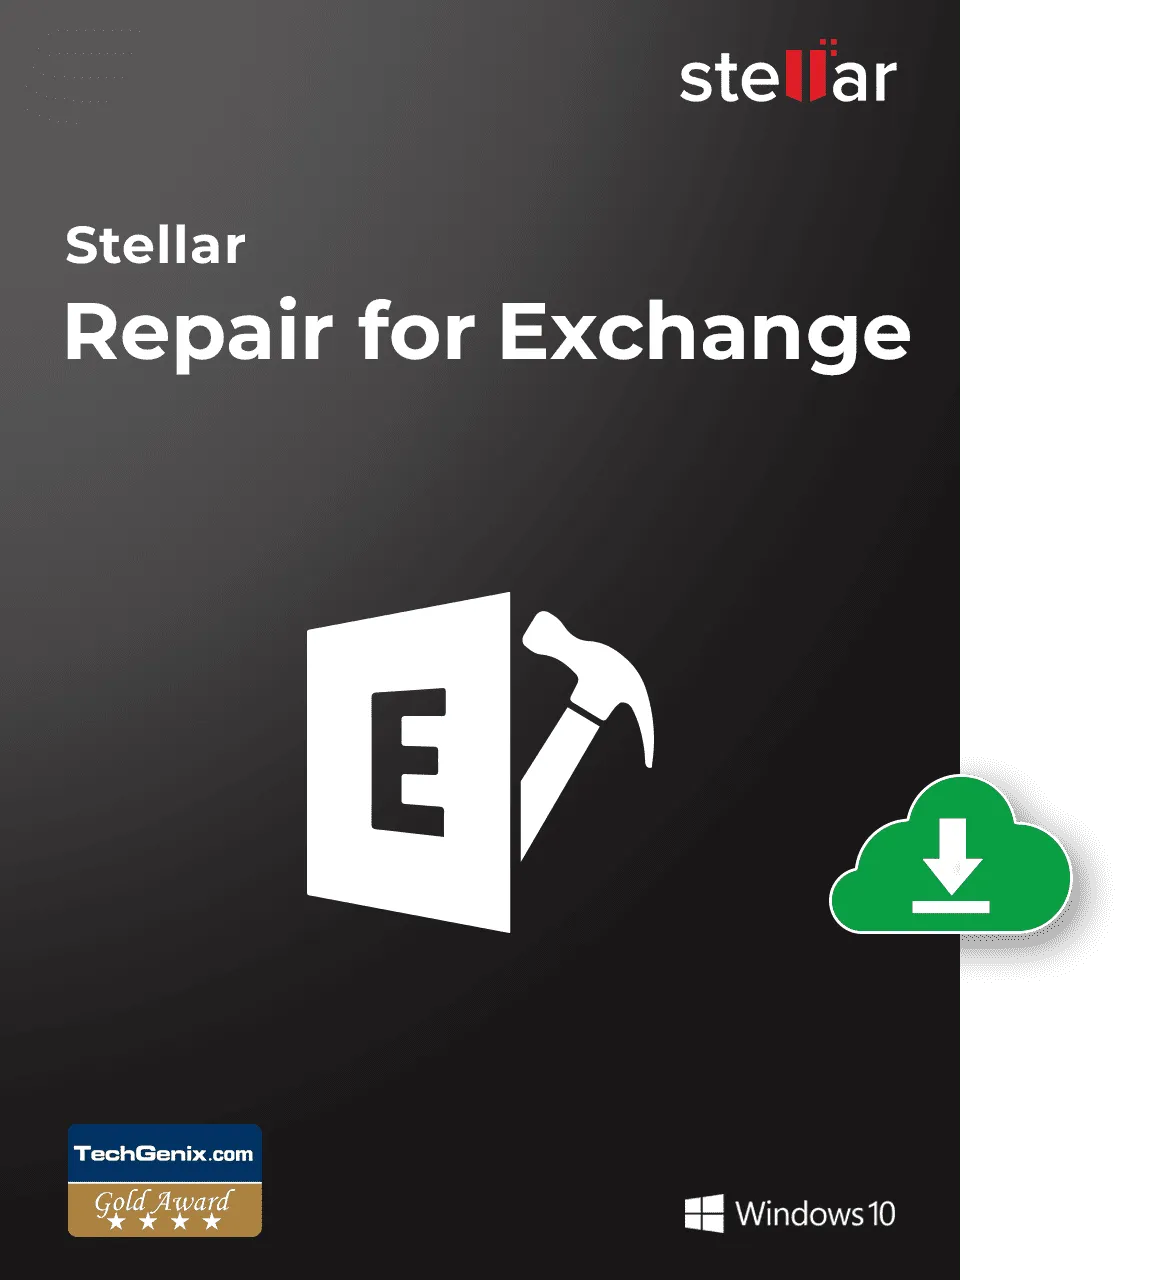  Repair for Exchange